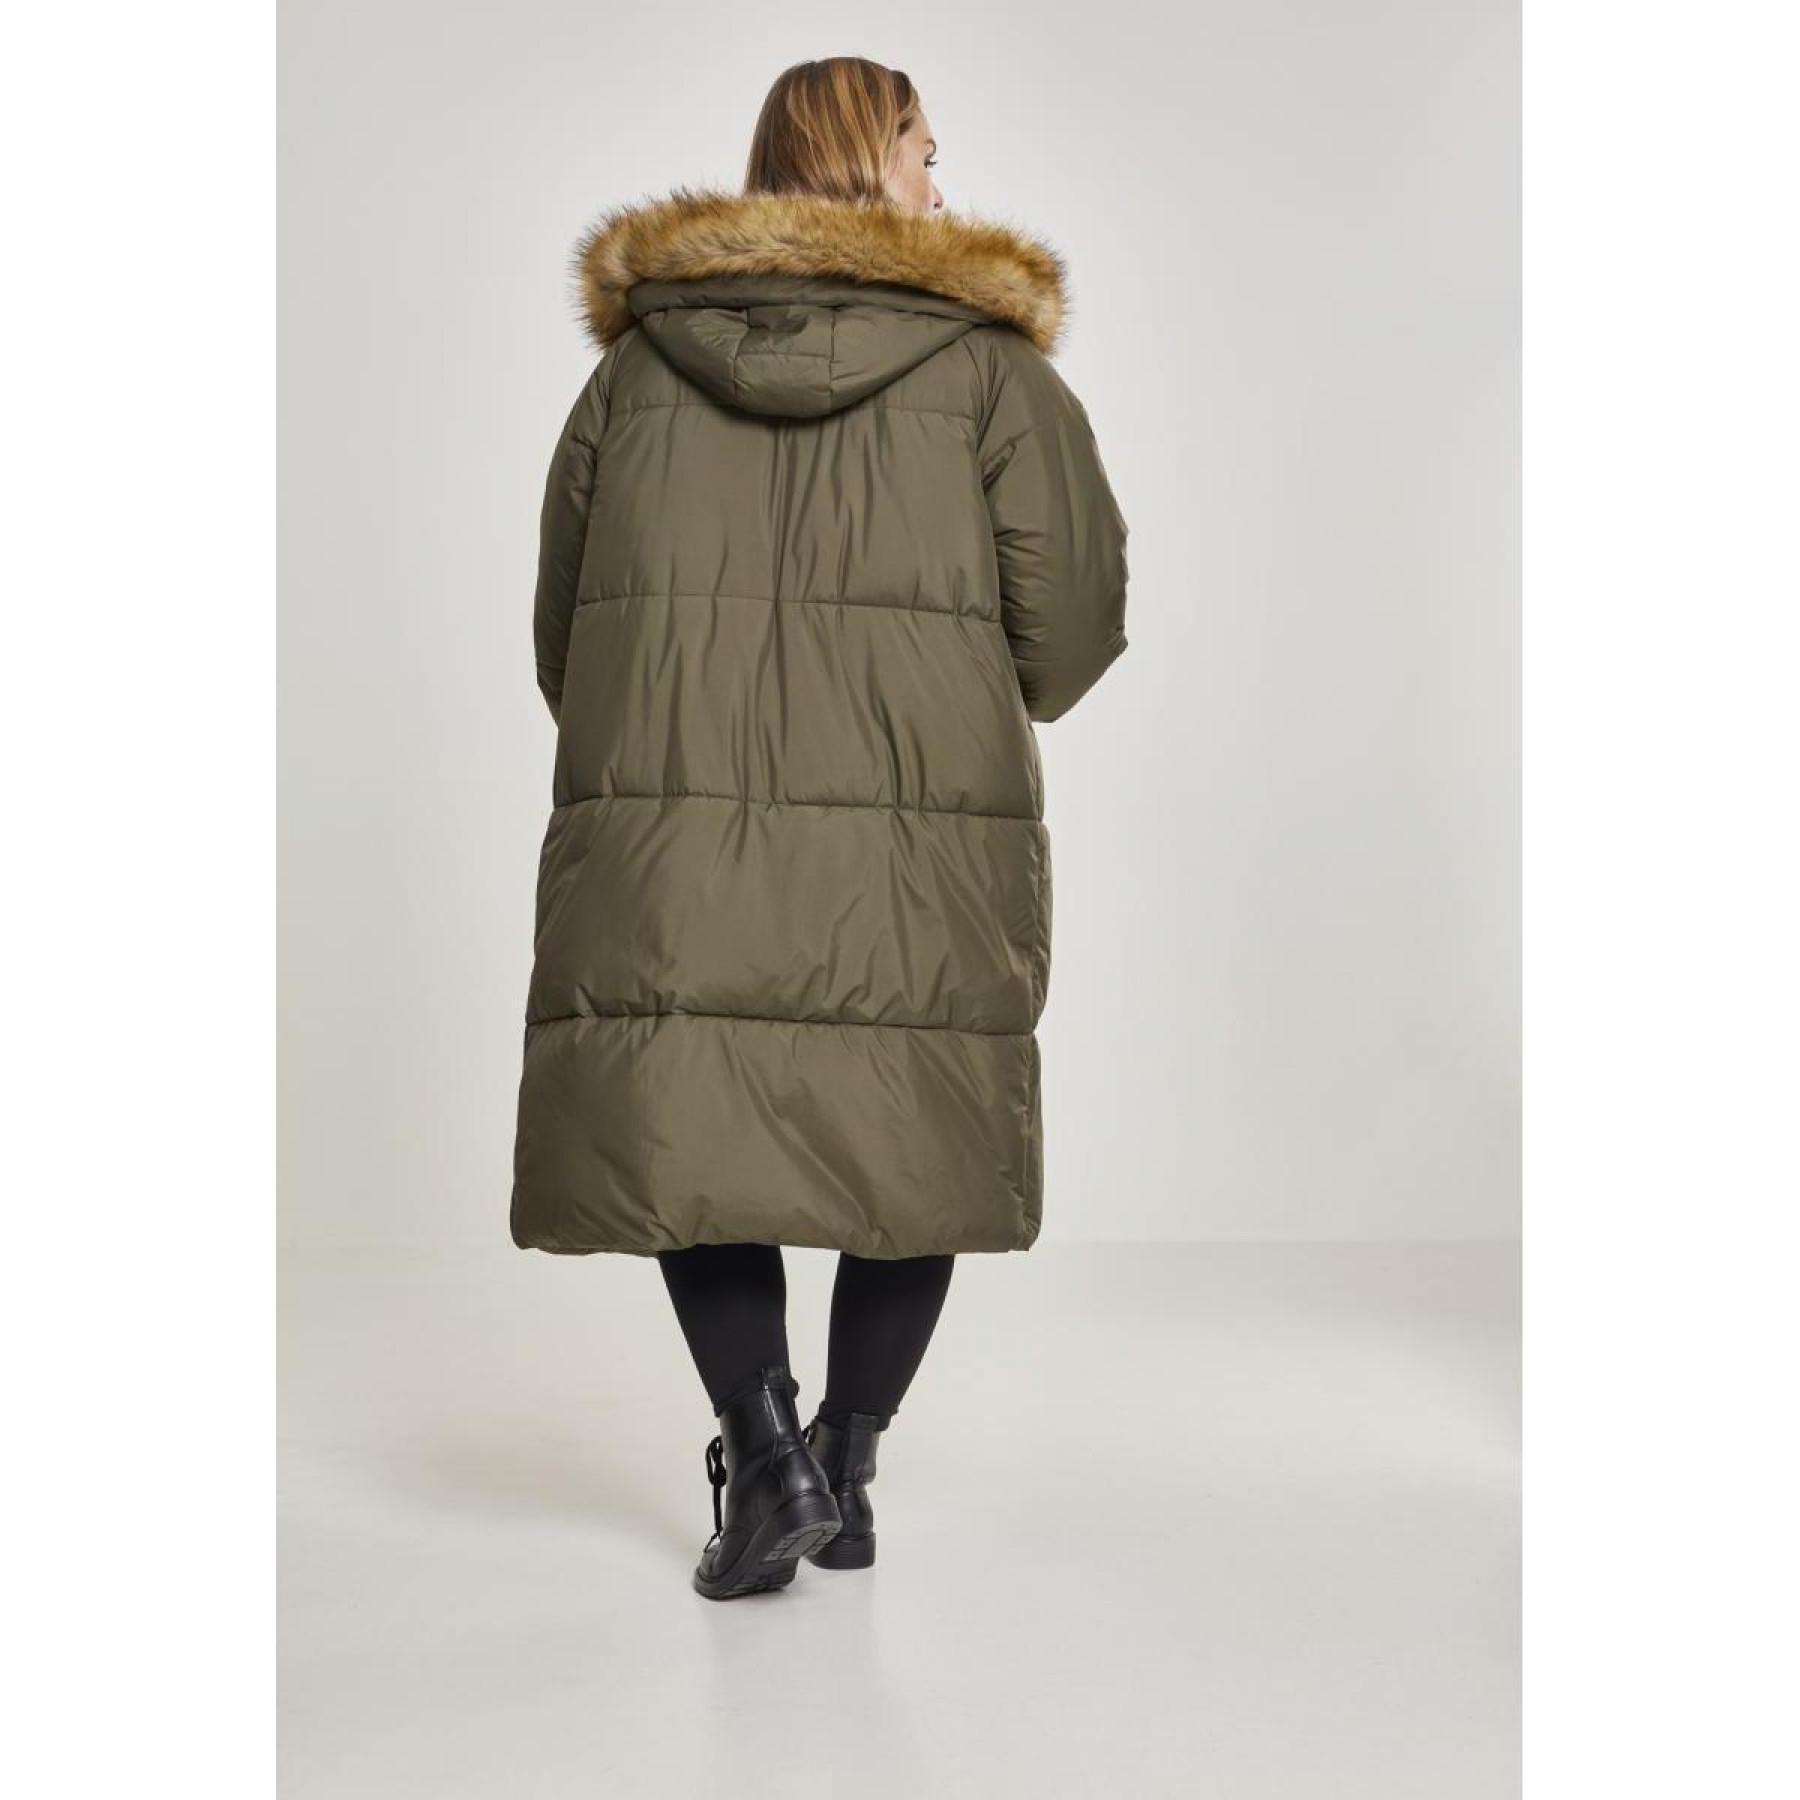 coat Women\'s - Coats Jackets Urban and - - Oversize parka Lifestyle Woman Classic